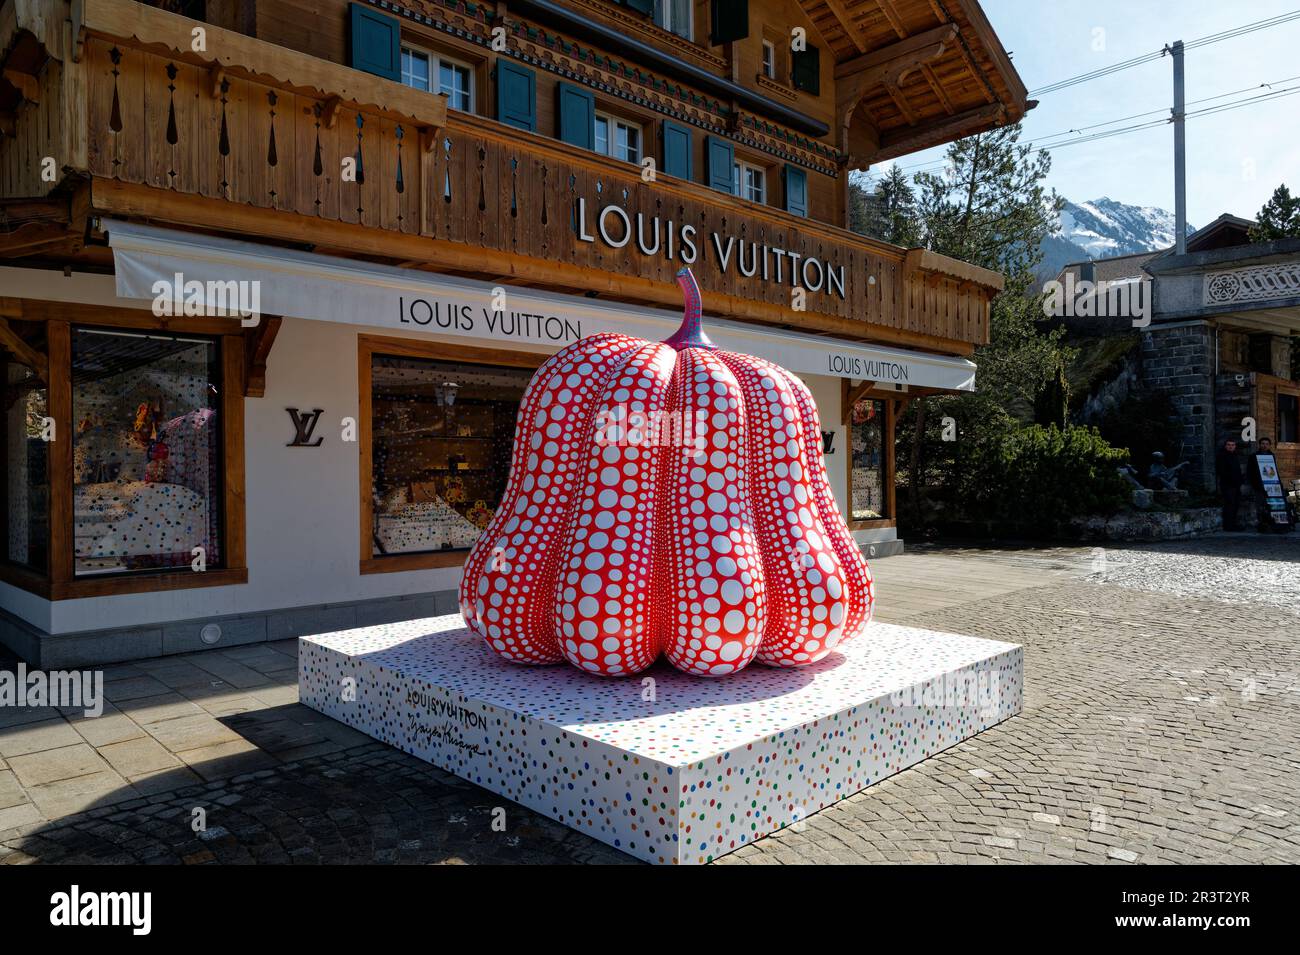 Louis Vuitton Gstaad Store in Gstaad, Switzerland